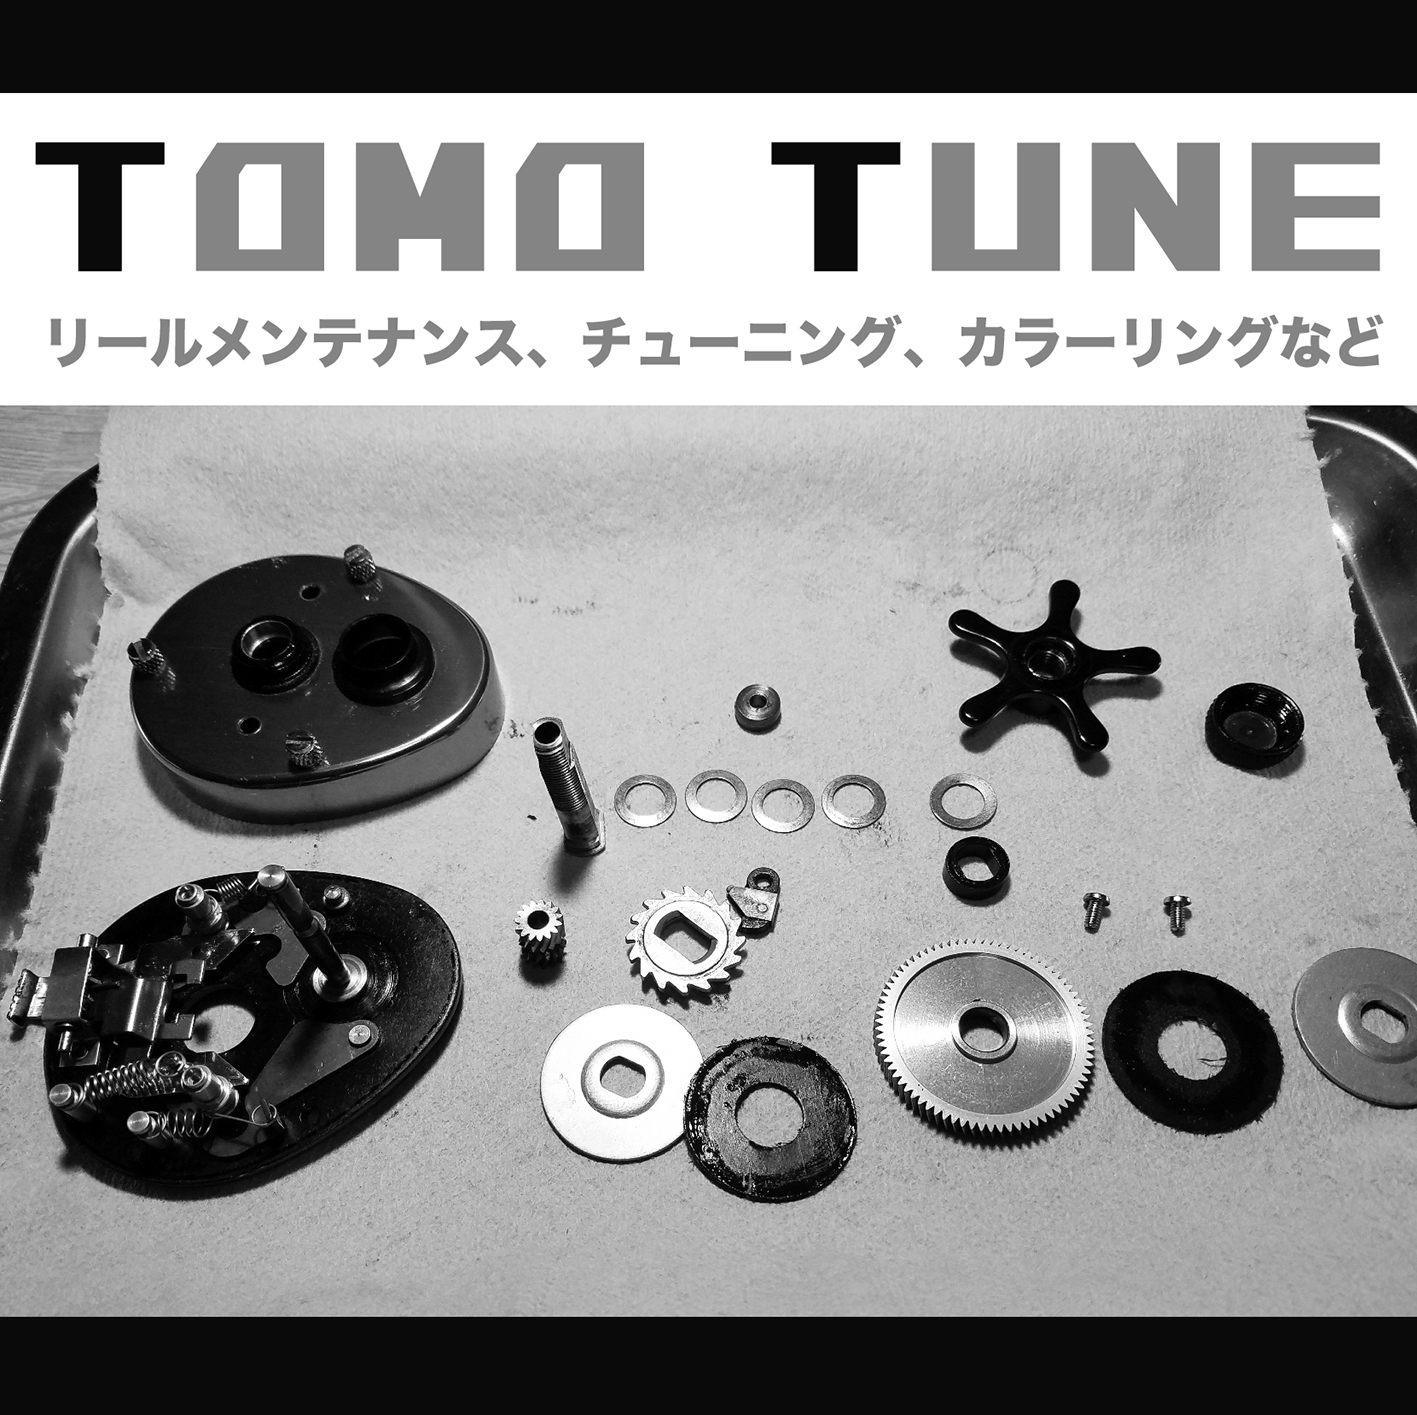 Tomotune リールチューンの申し込み トップトウストア トップウォーターバスフィッシングに特化した日本で唯一の雑誌 トップトウ の公式オンラインストアです